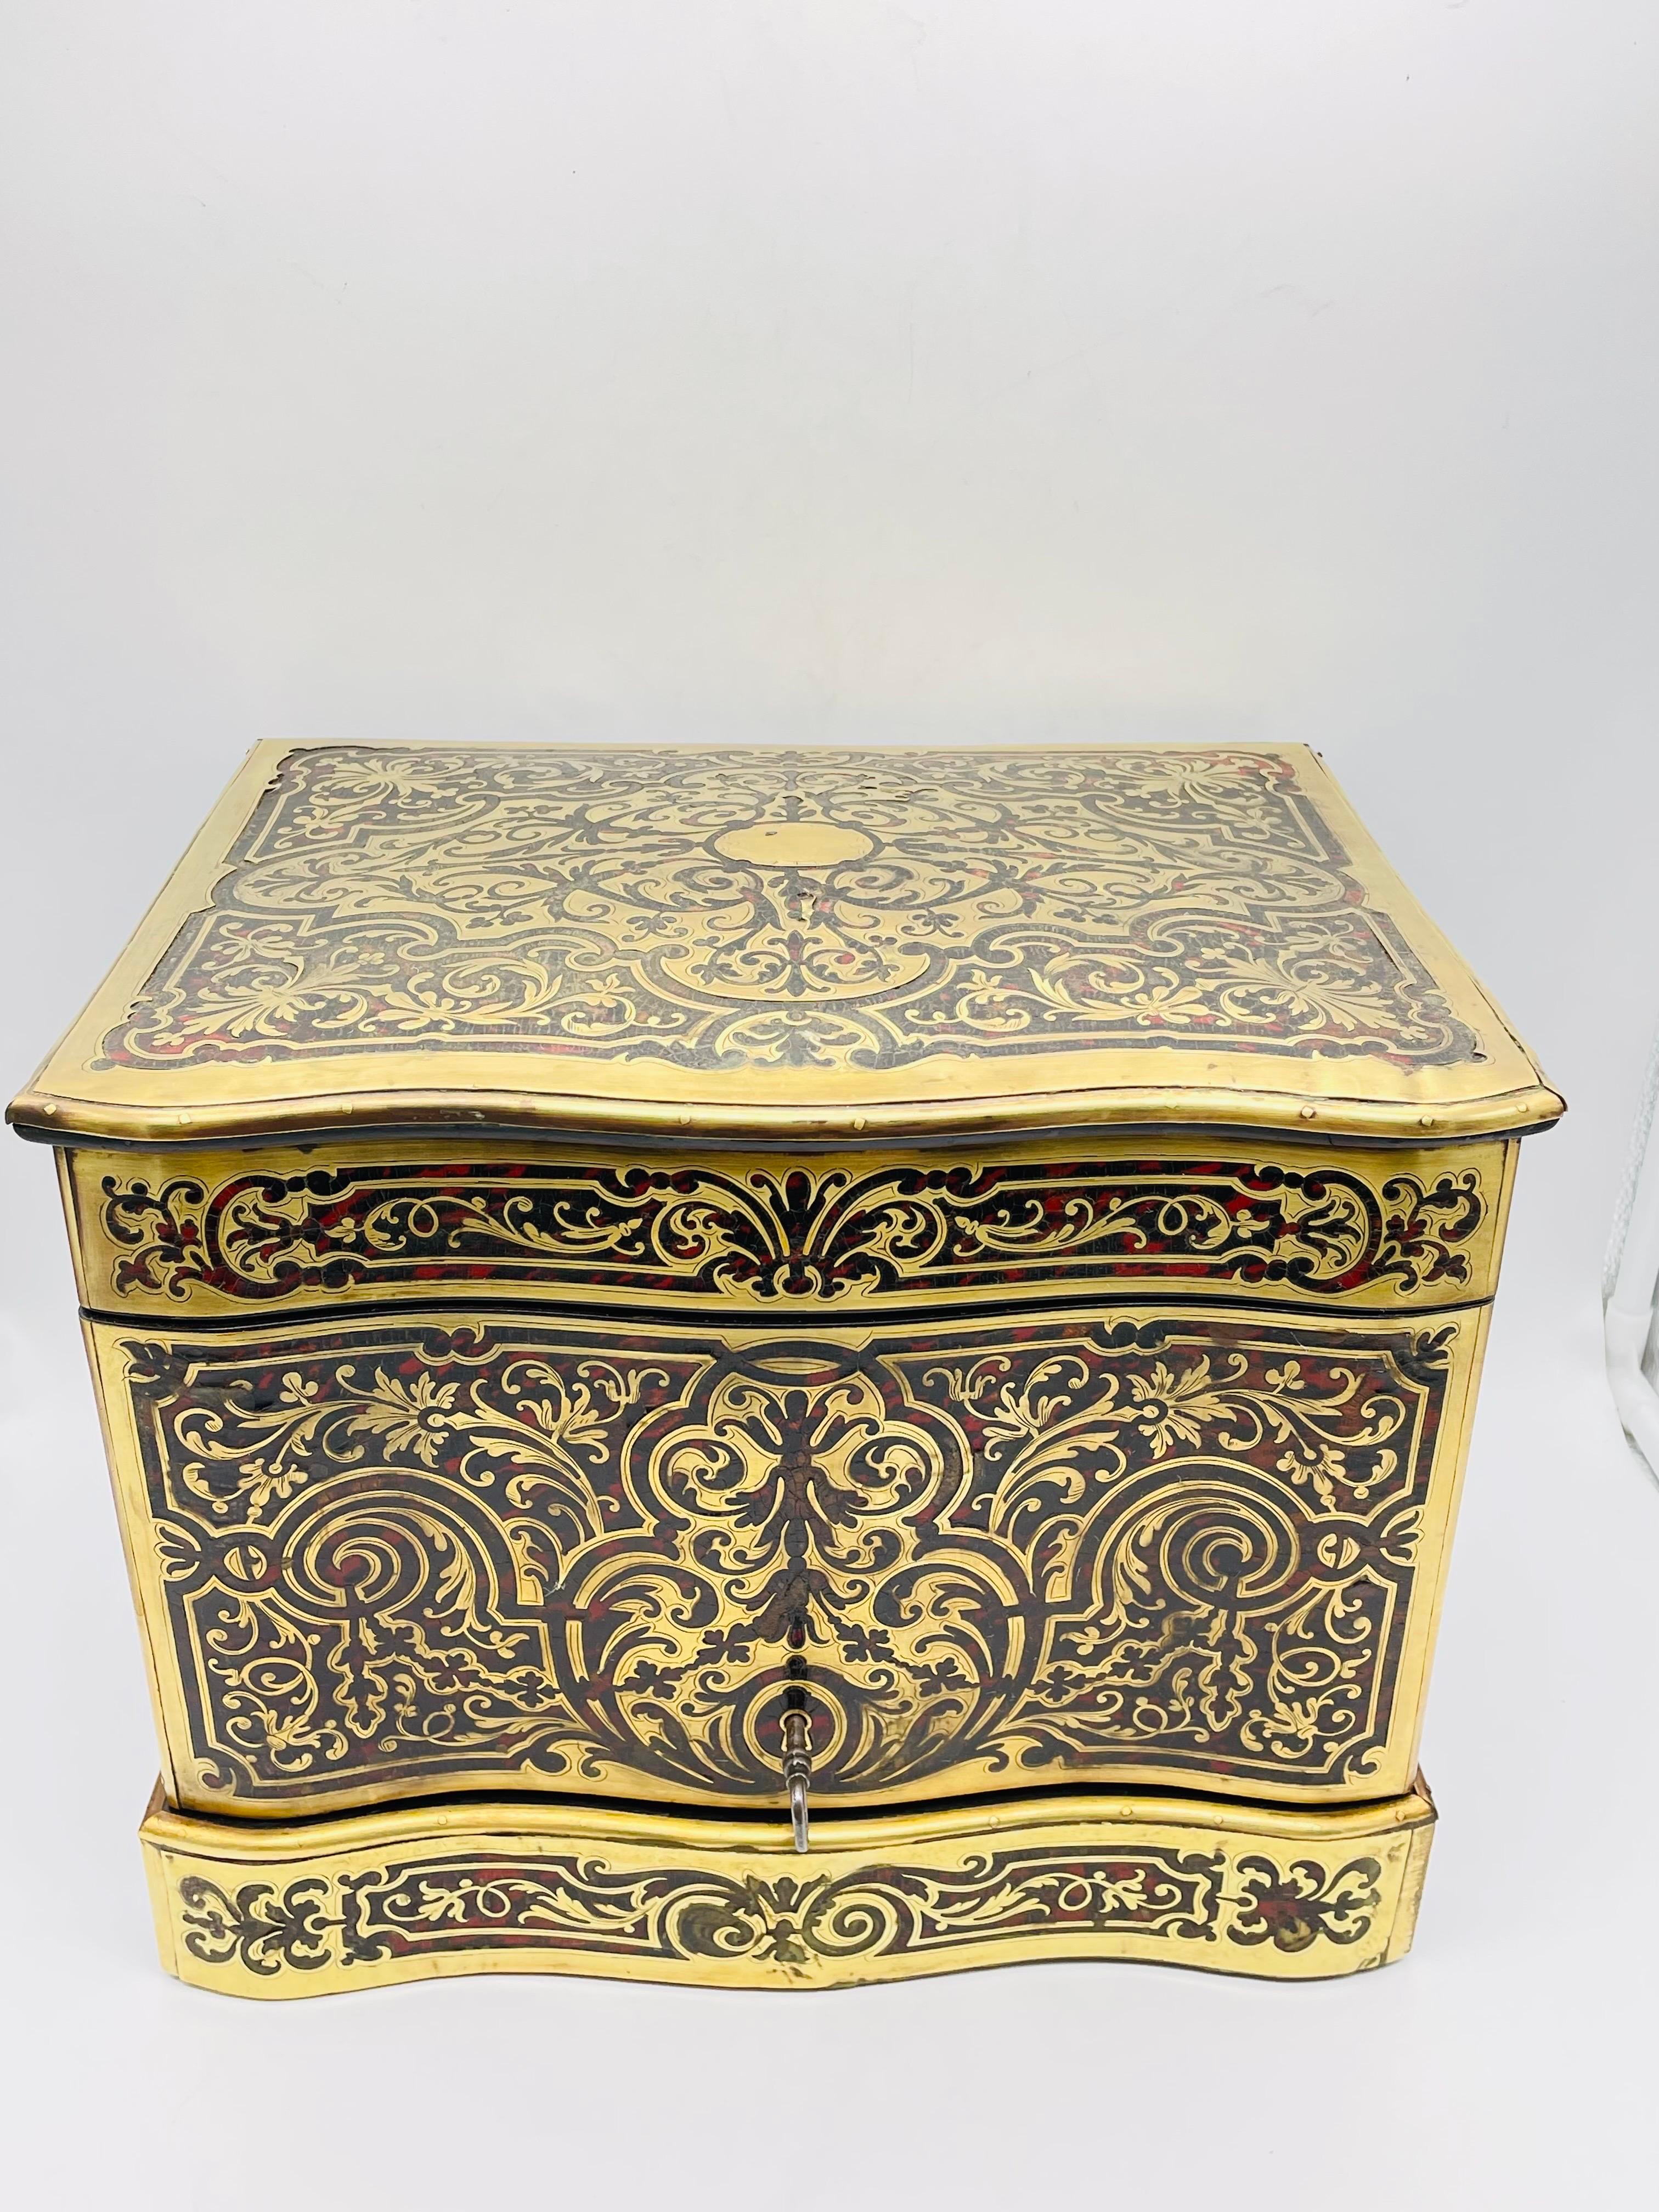 Impressive Boulle Napoleonic Tantalus Liquor Cabinet, 19th Century For Sale 12